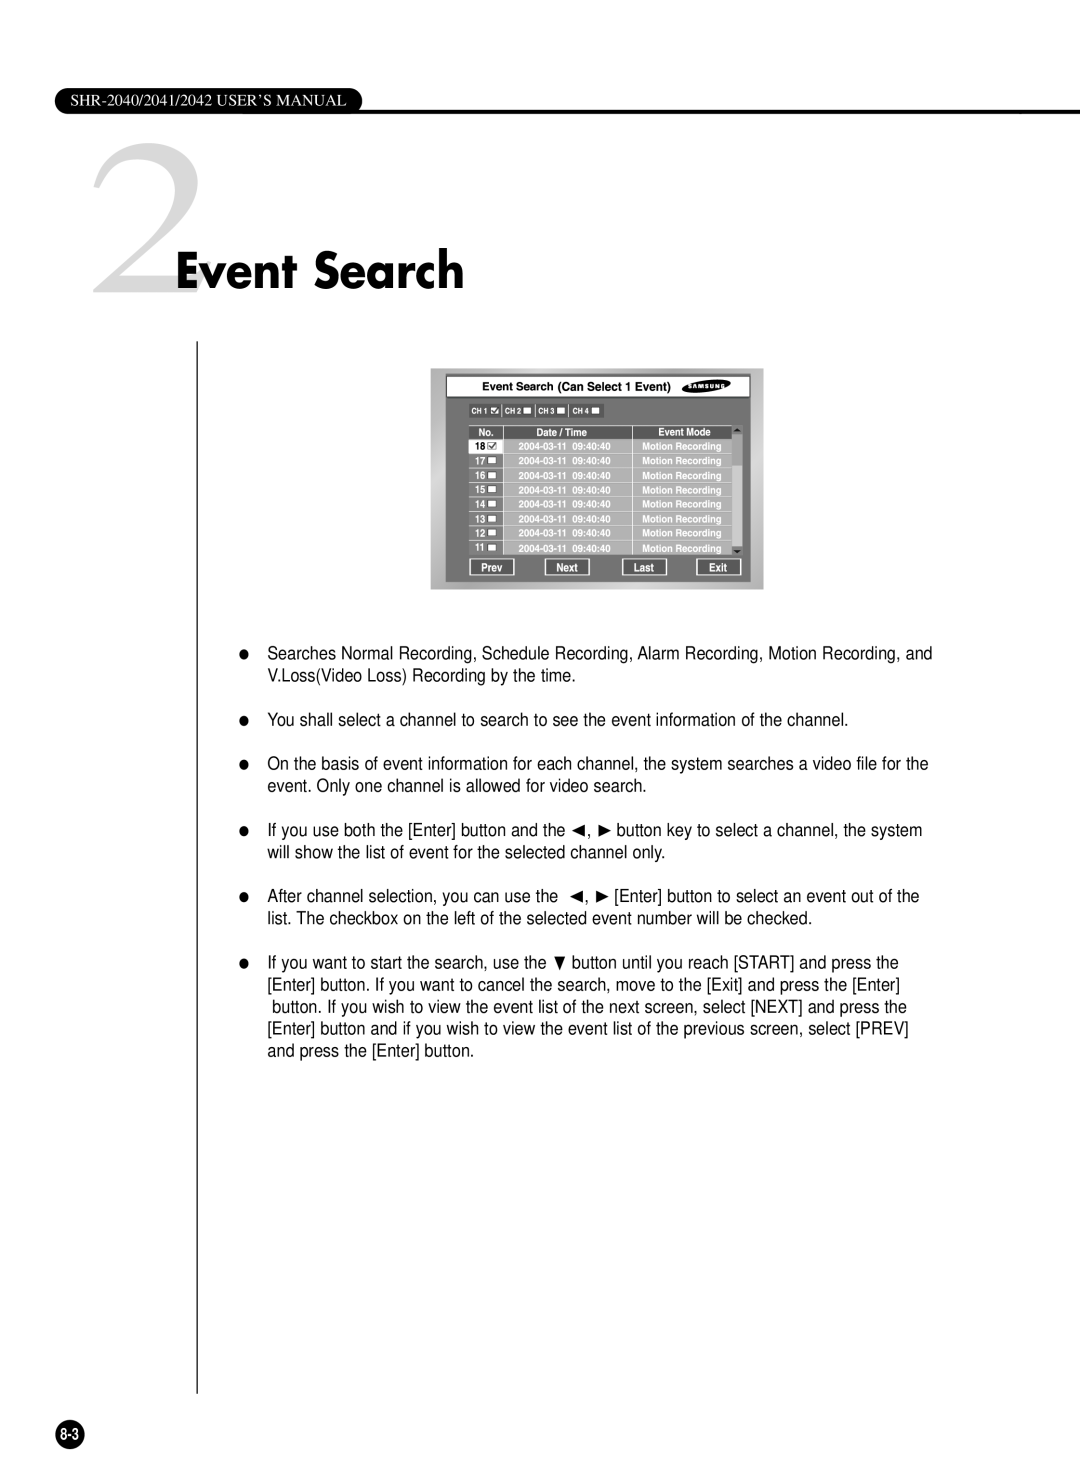 Samsung SHR-2040P/GAR, SHR-2042P, SHR-2040PX, SHR-2040P/XEC manual 2Event Search 